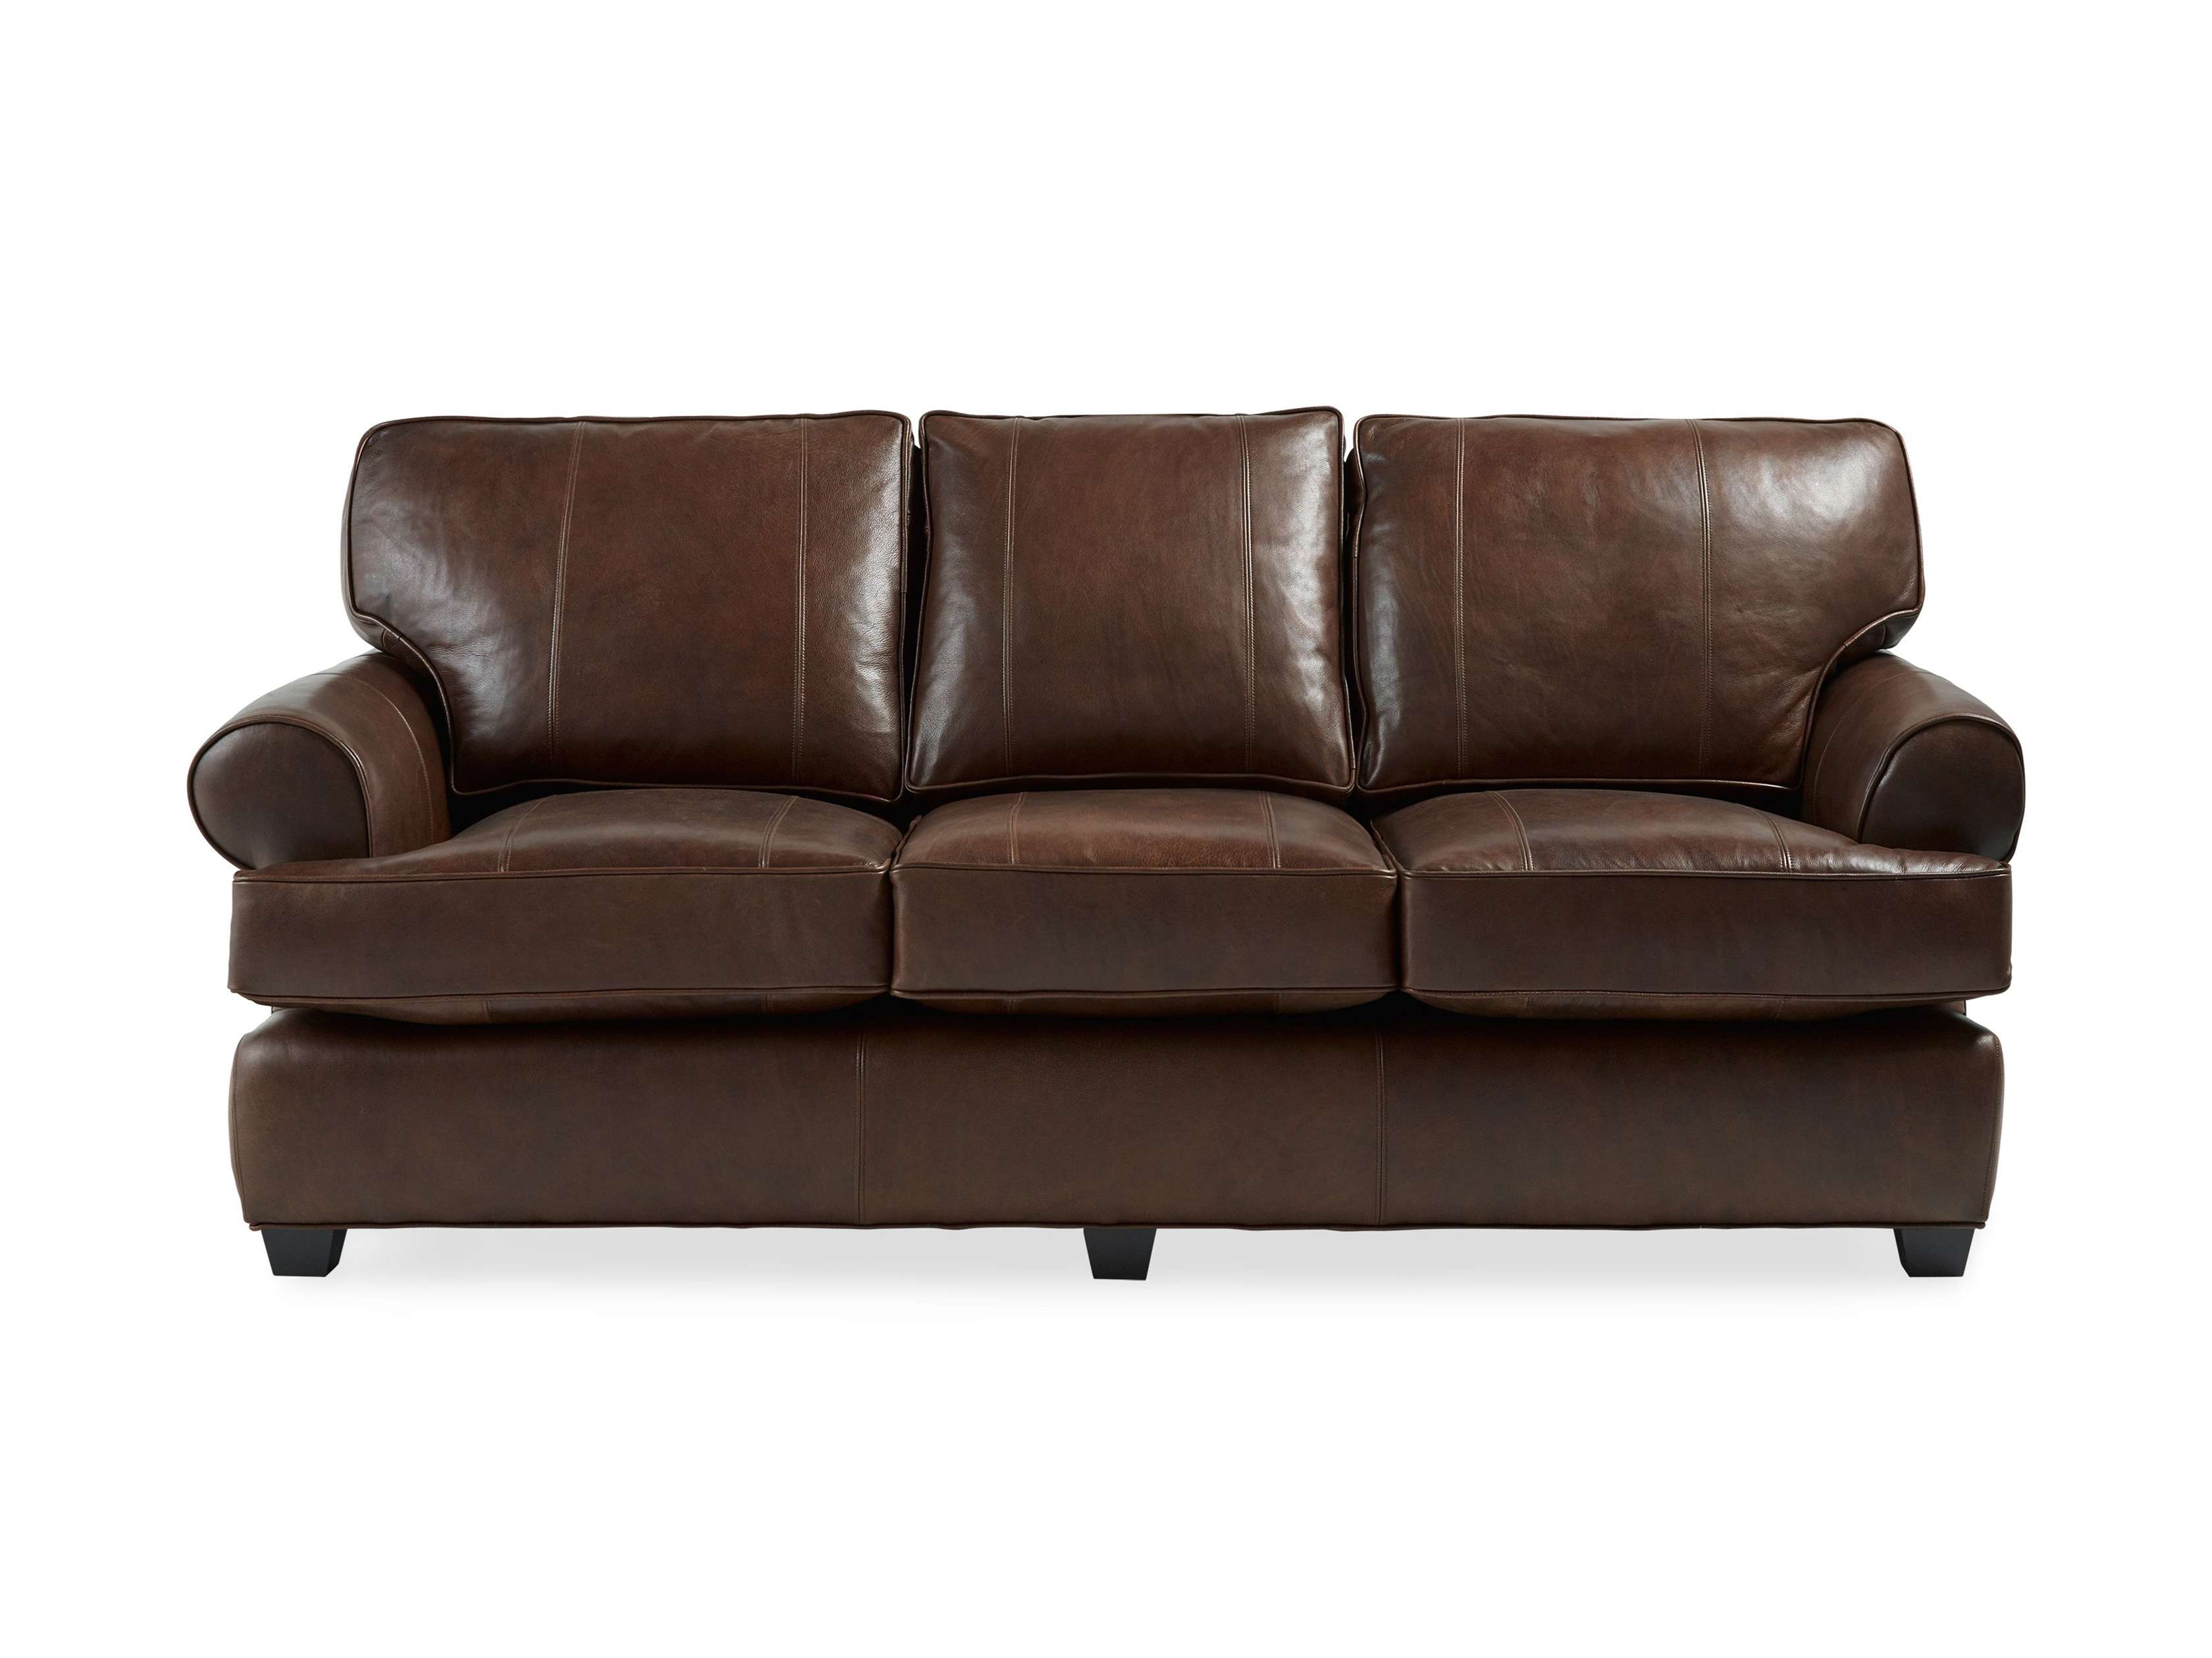 Hadley Leather Sofa Arhaus, Chocolate Brown Leather Sofa